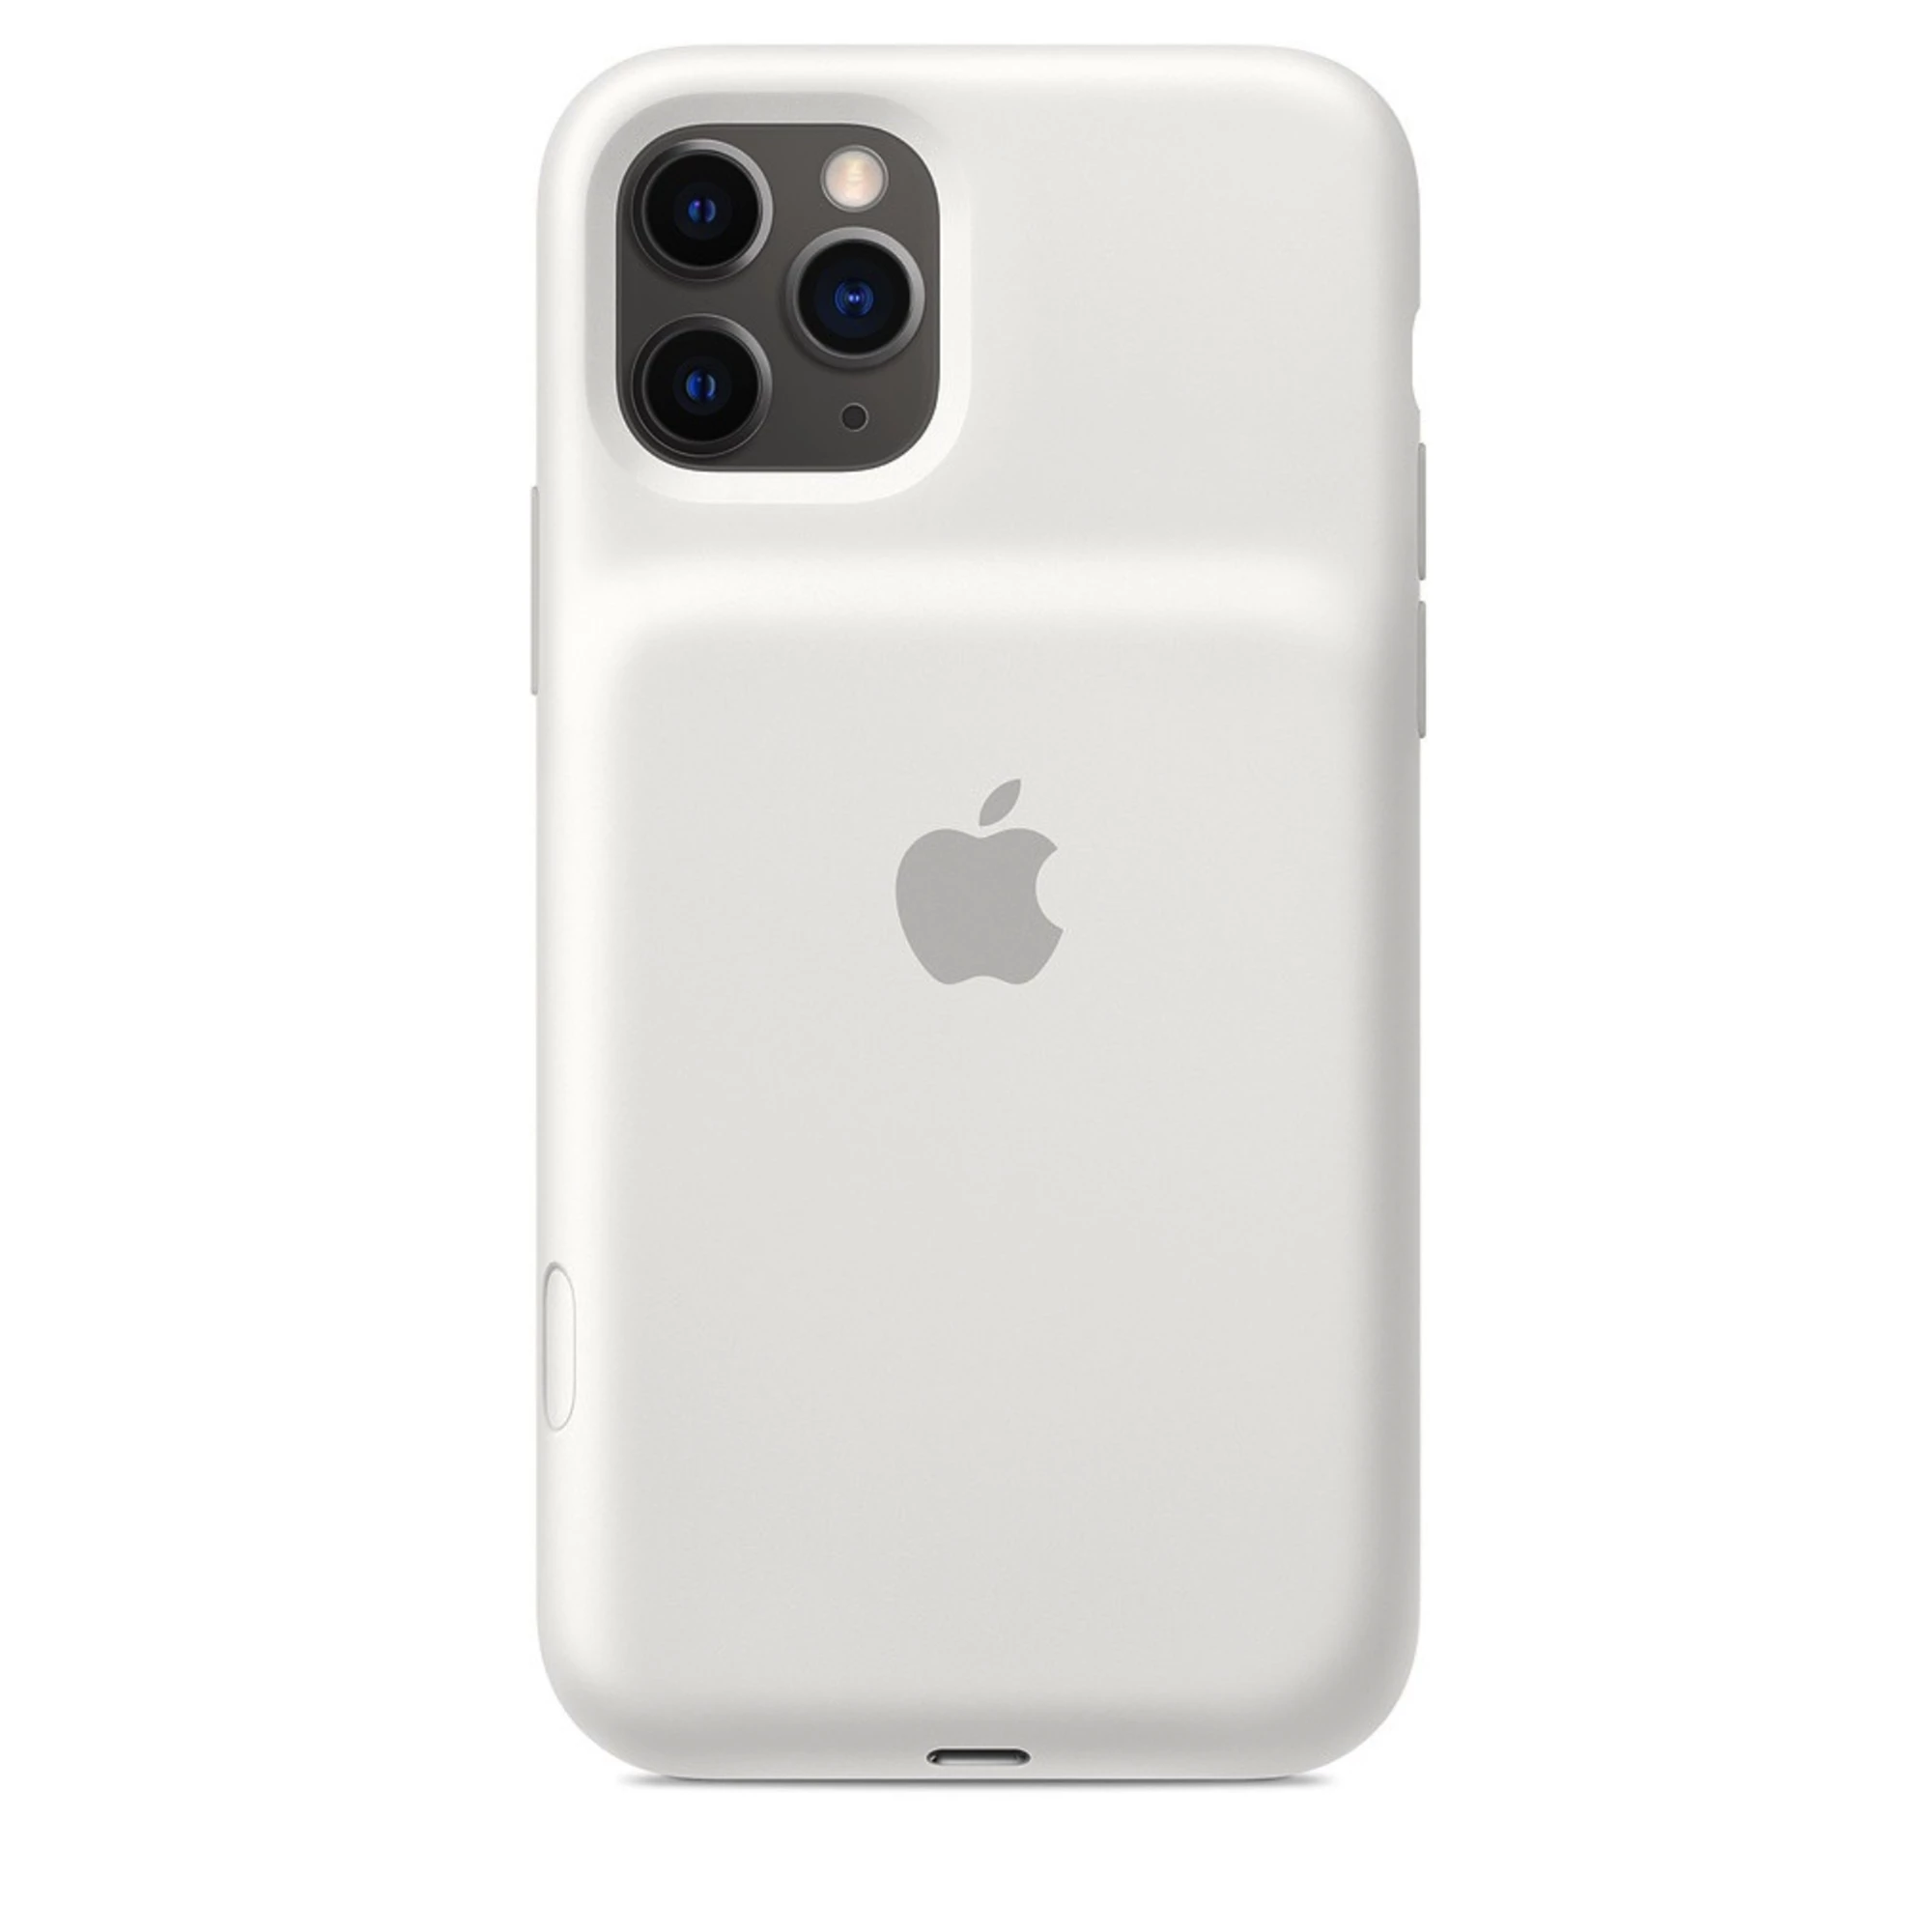 Apple iPhone 11 Pro Smart Battery Case - White (MWVM2)